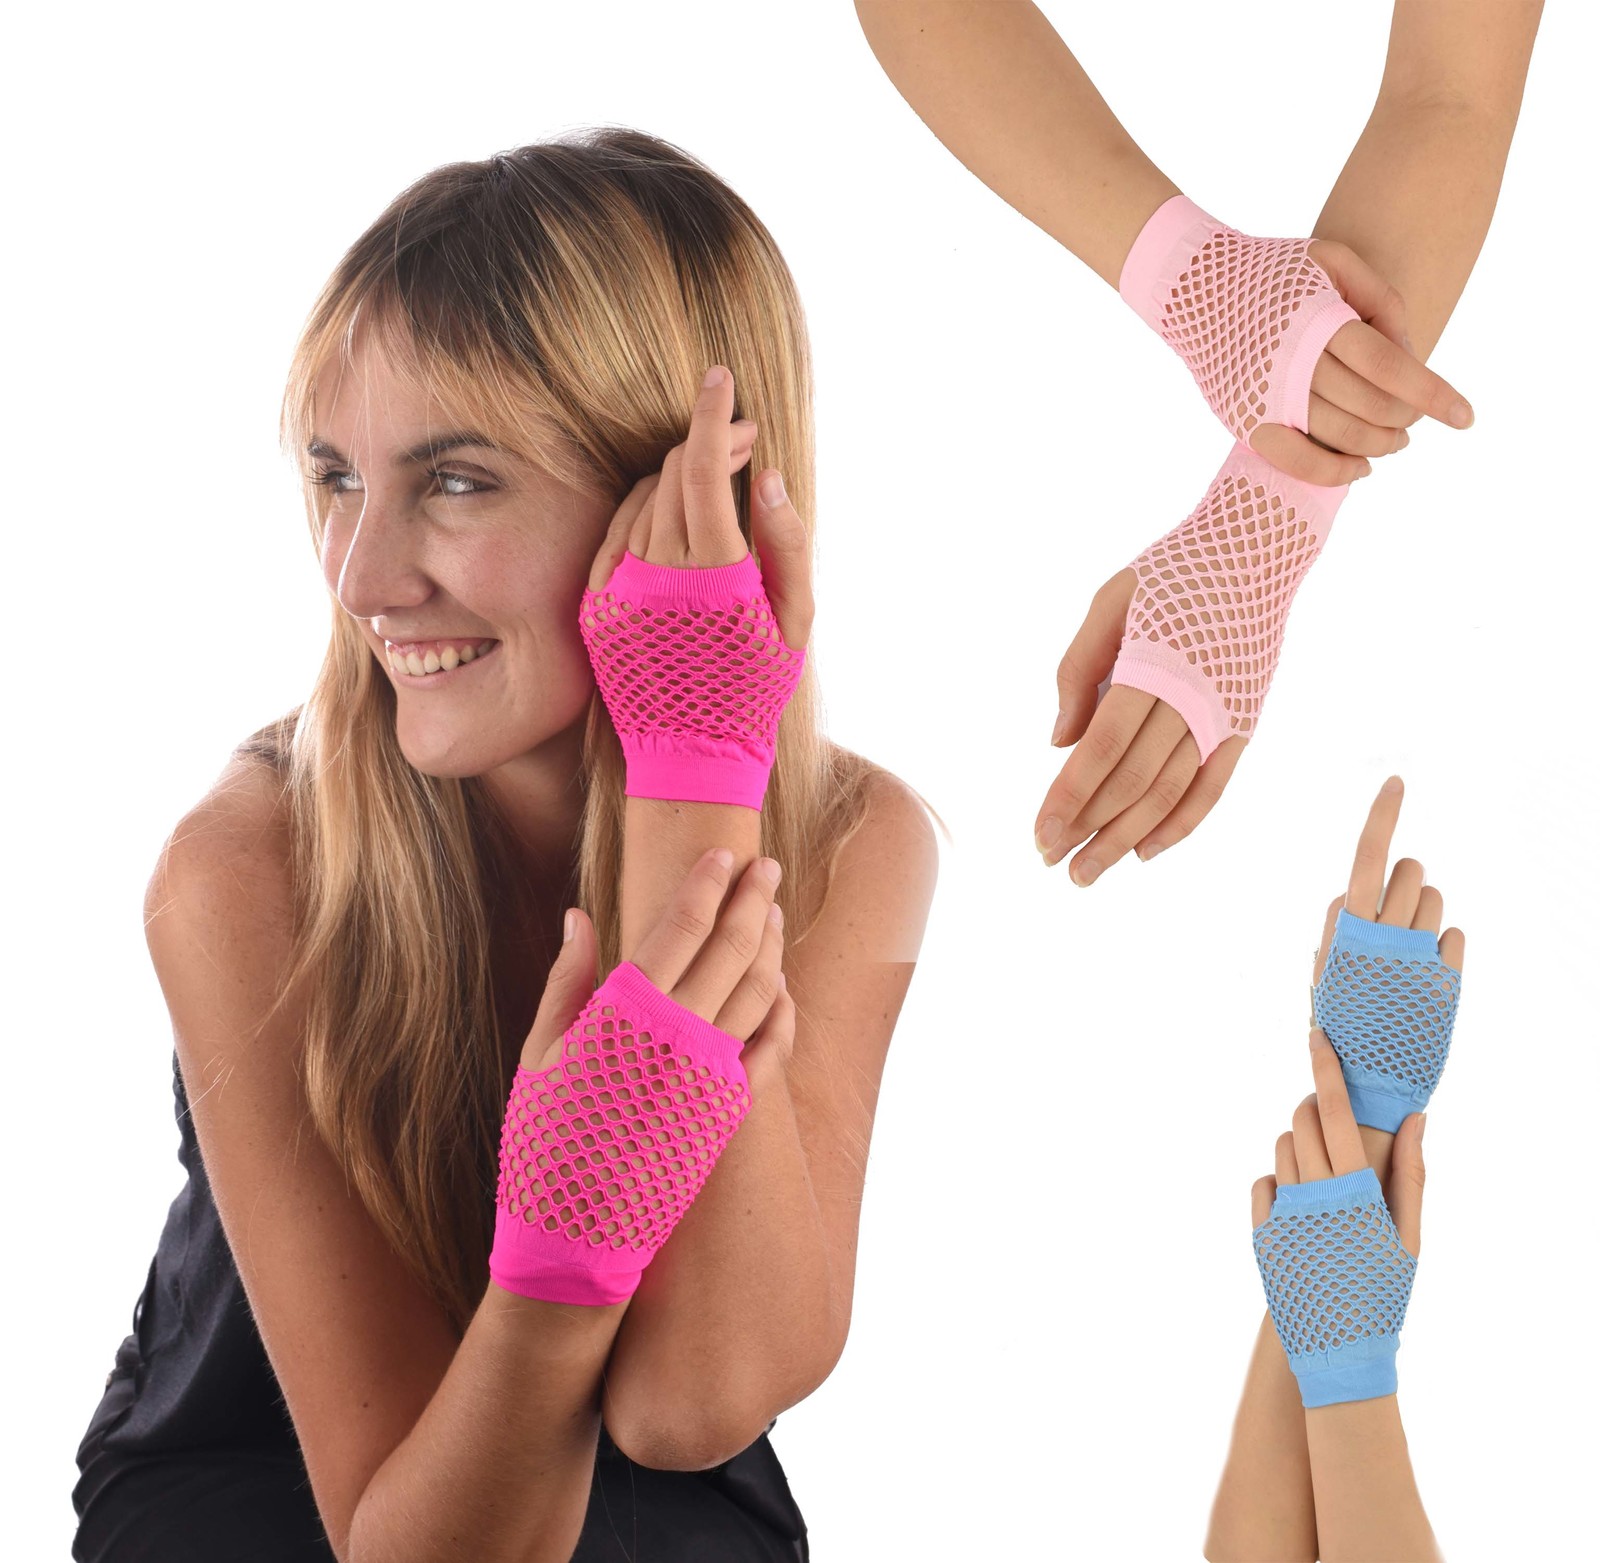 Fishnet Gloves Palm-Wrist Length